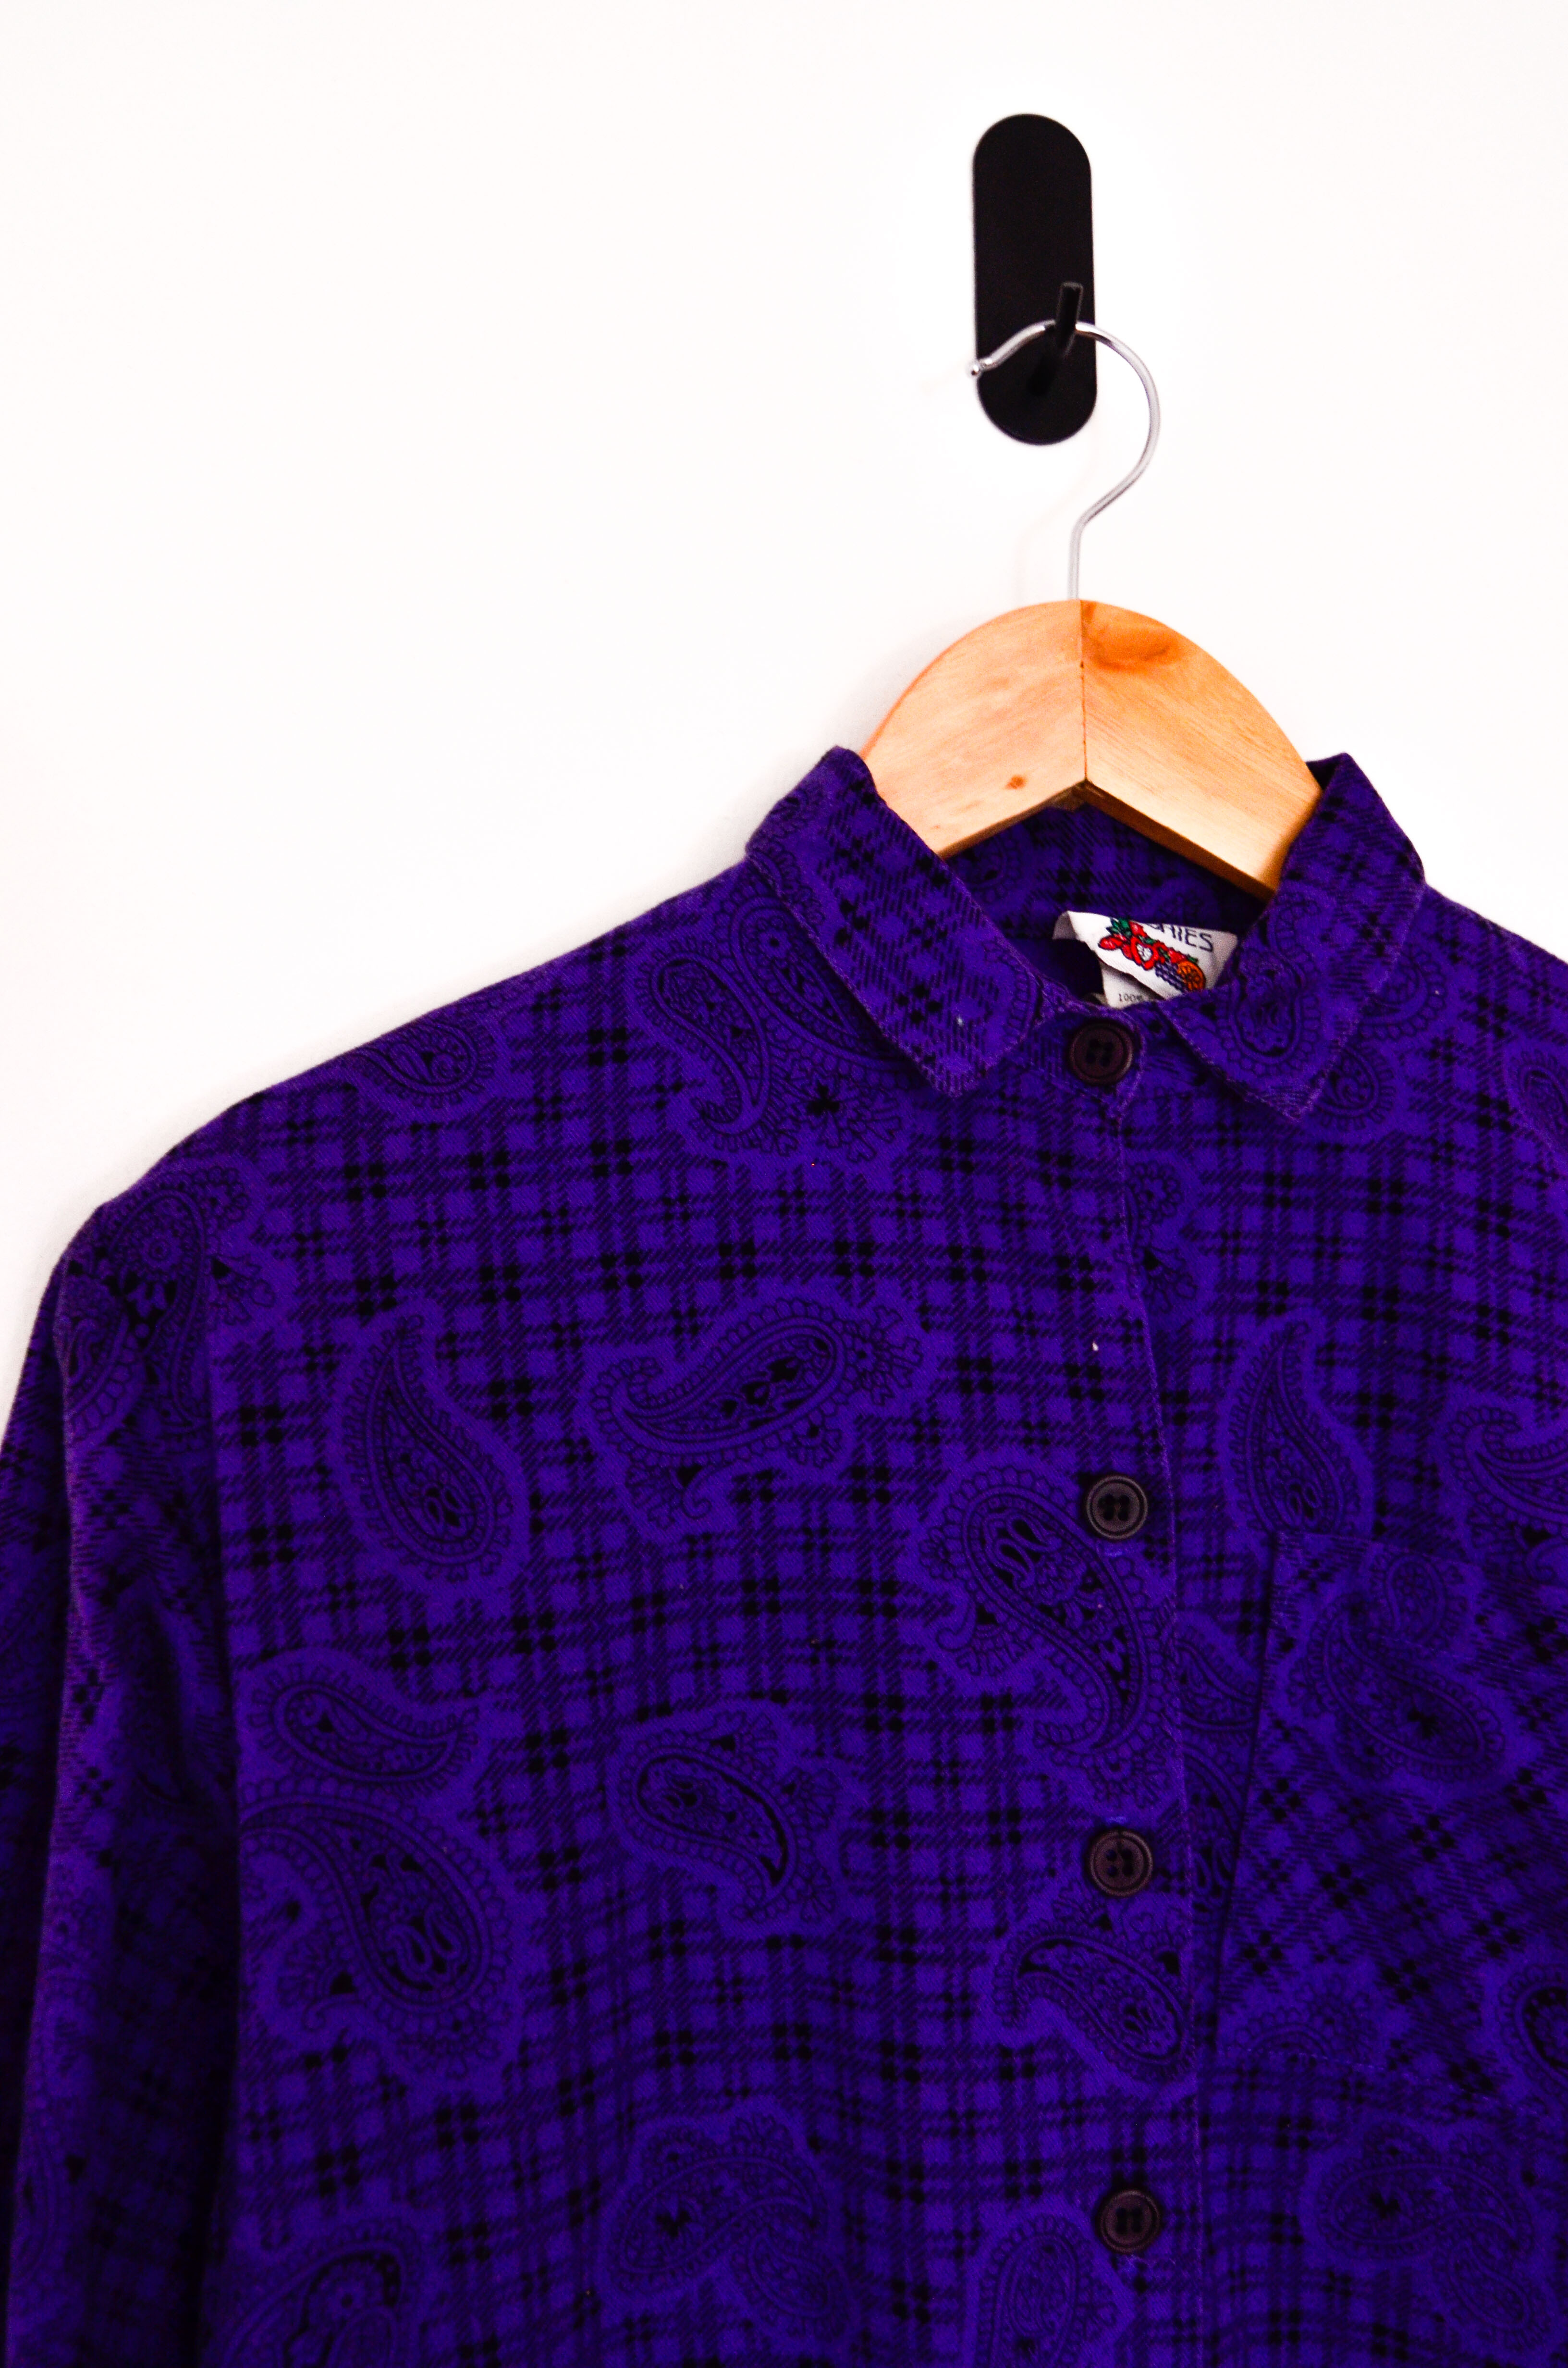 Camisa purple paisley vntg